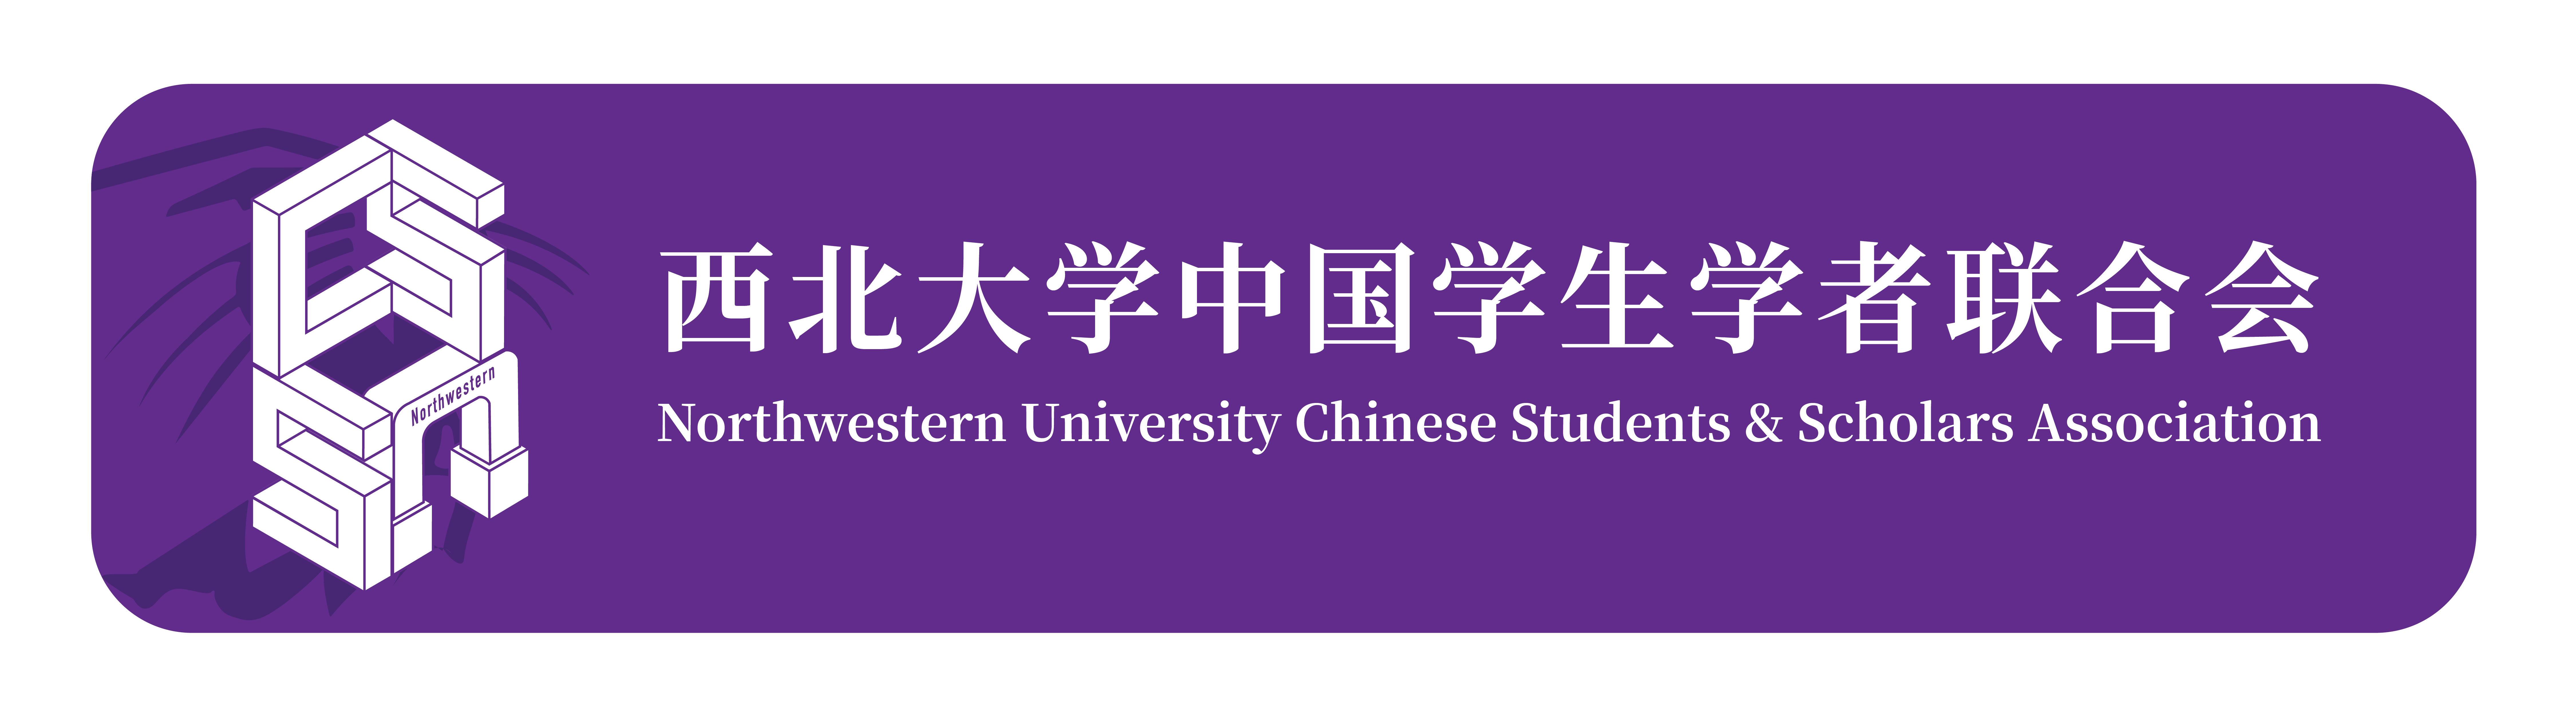 Northwestern University Chinese Students and Scholars Association